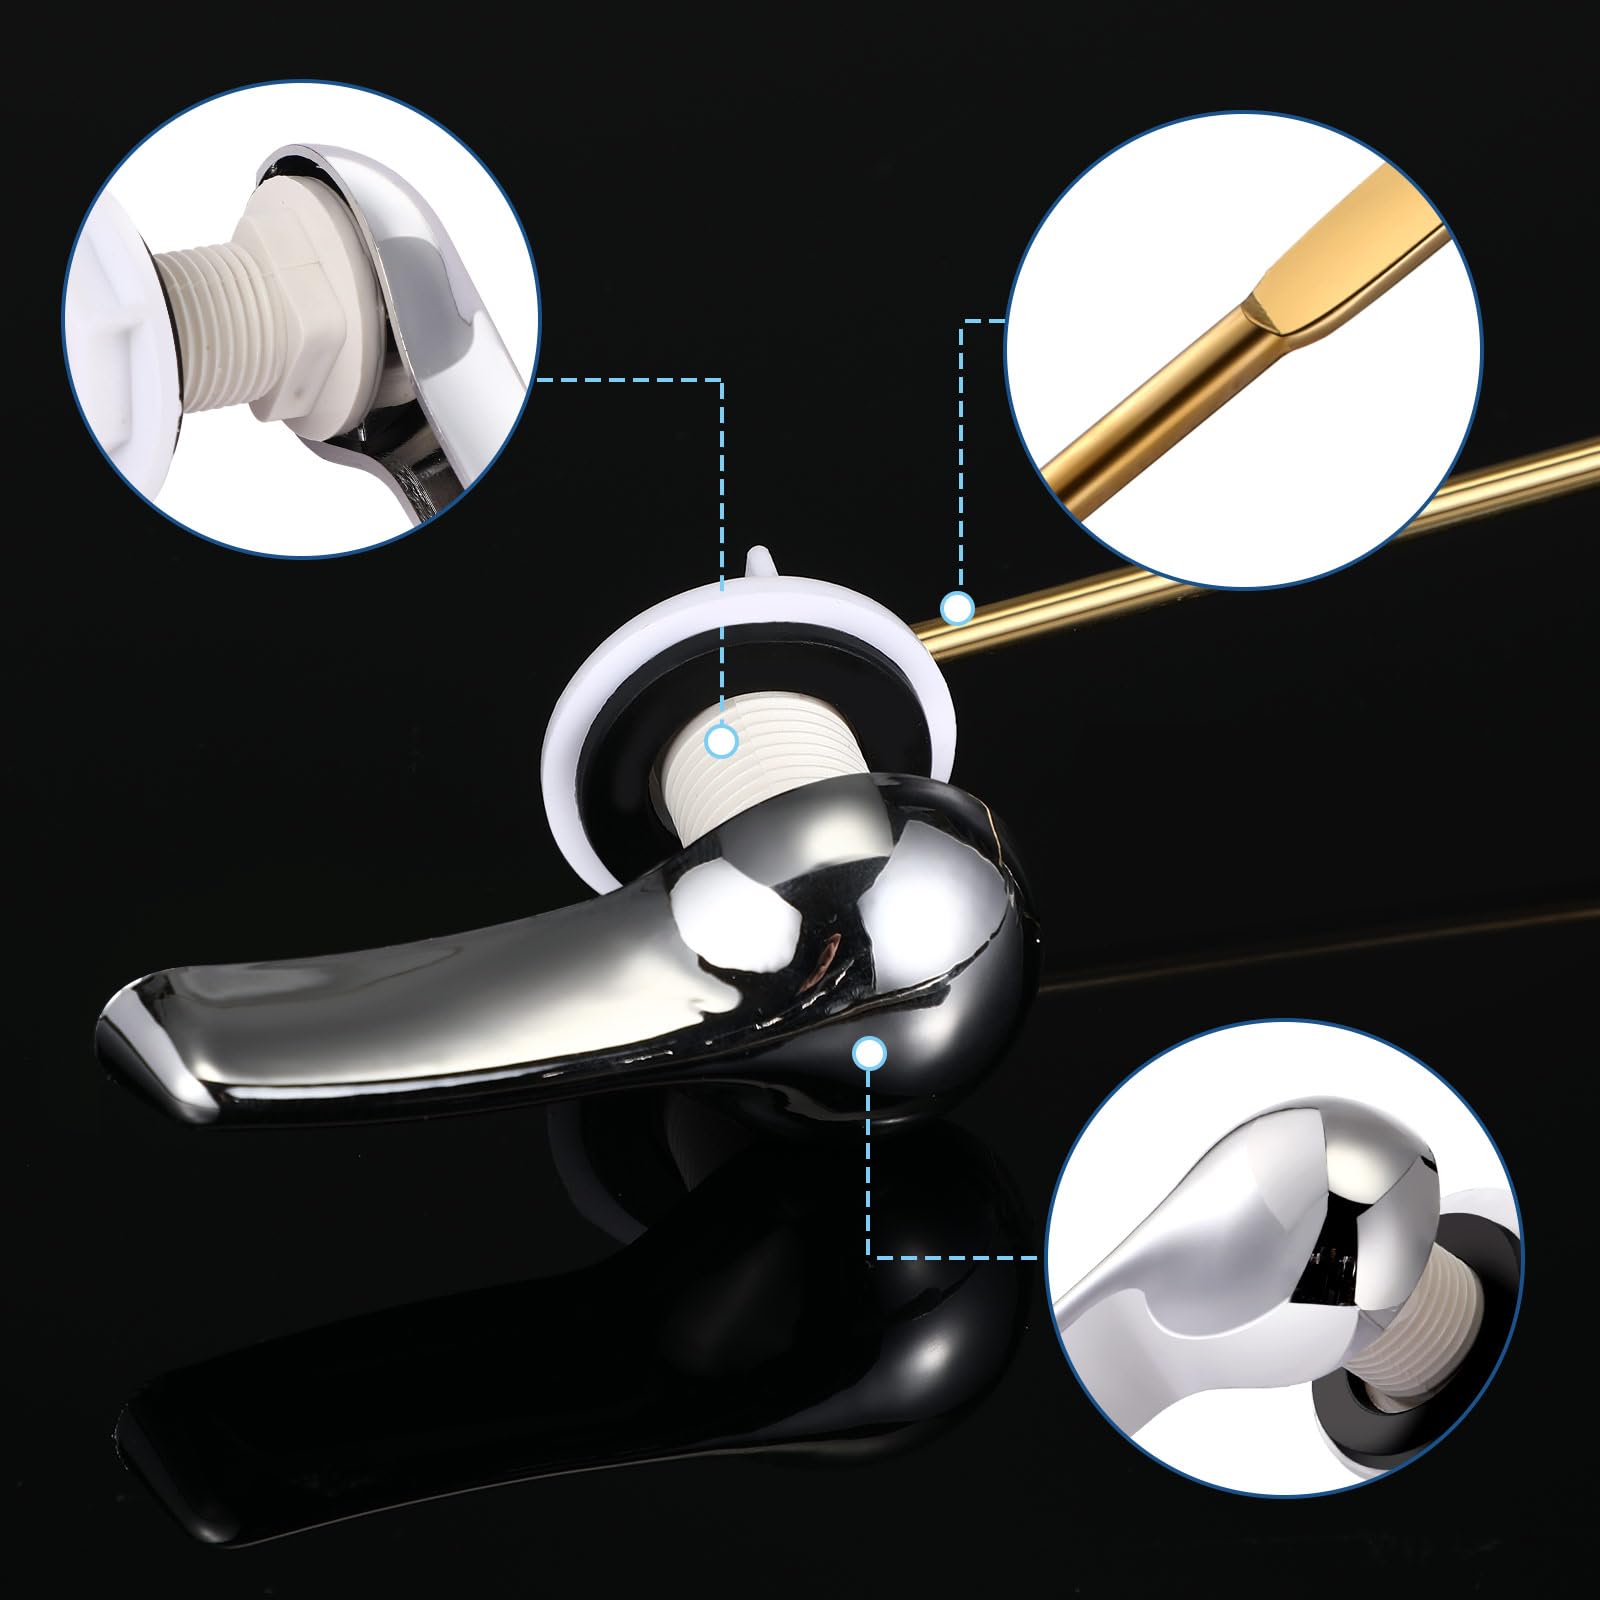 Lasnten 12 Pieces Toilet Handle Lever Flush Replacement, Brass Universal Flush Lever Finish Handle for Most Toilets (Front Mount)